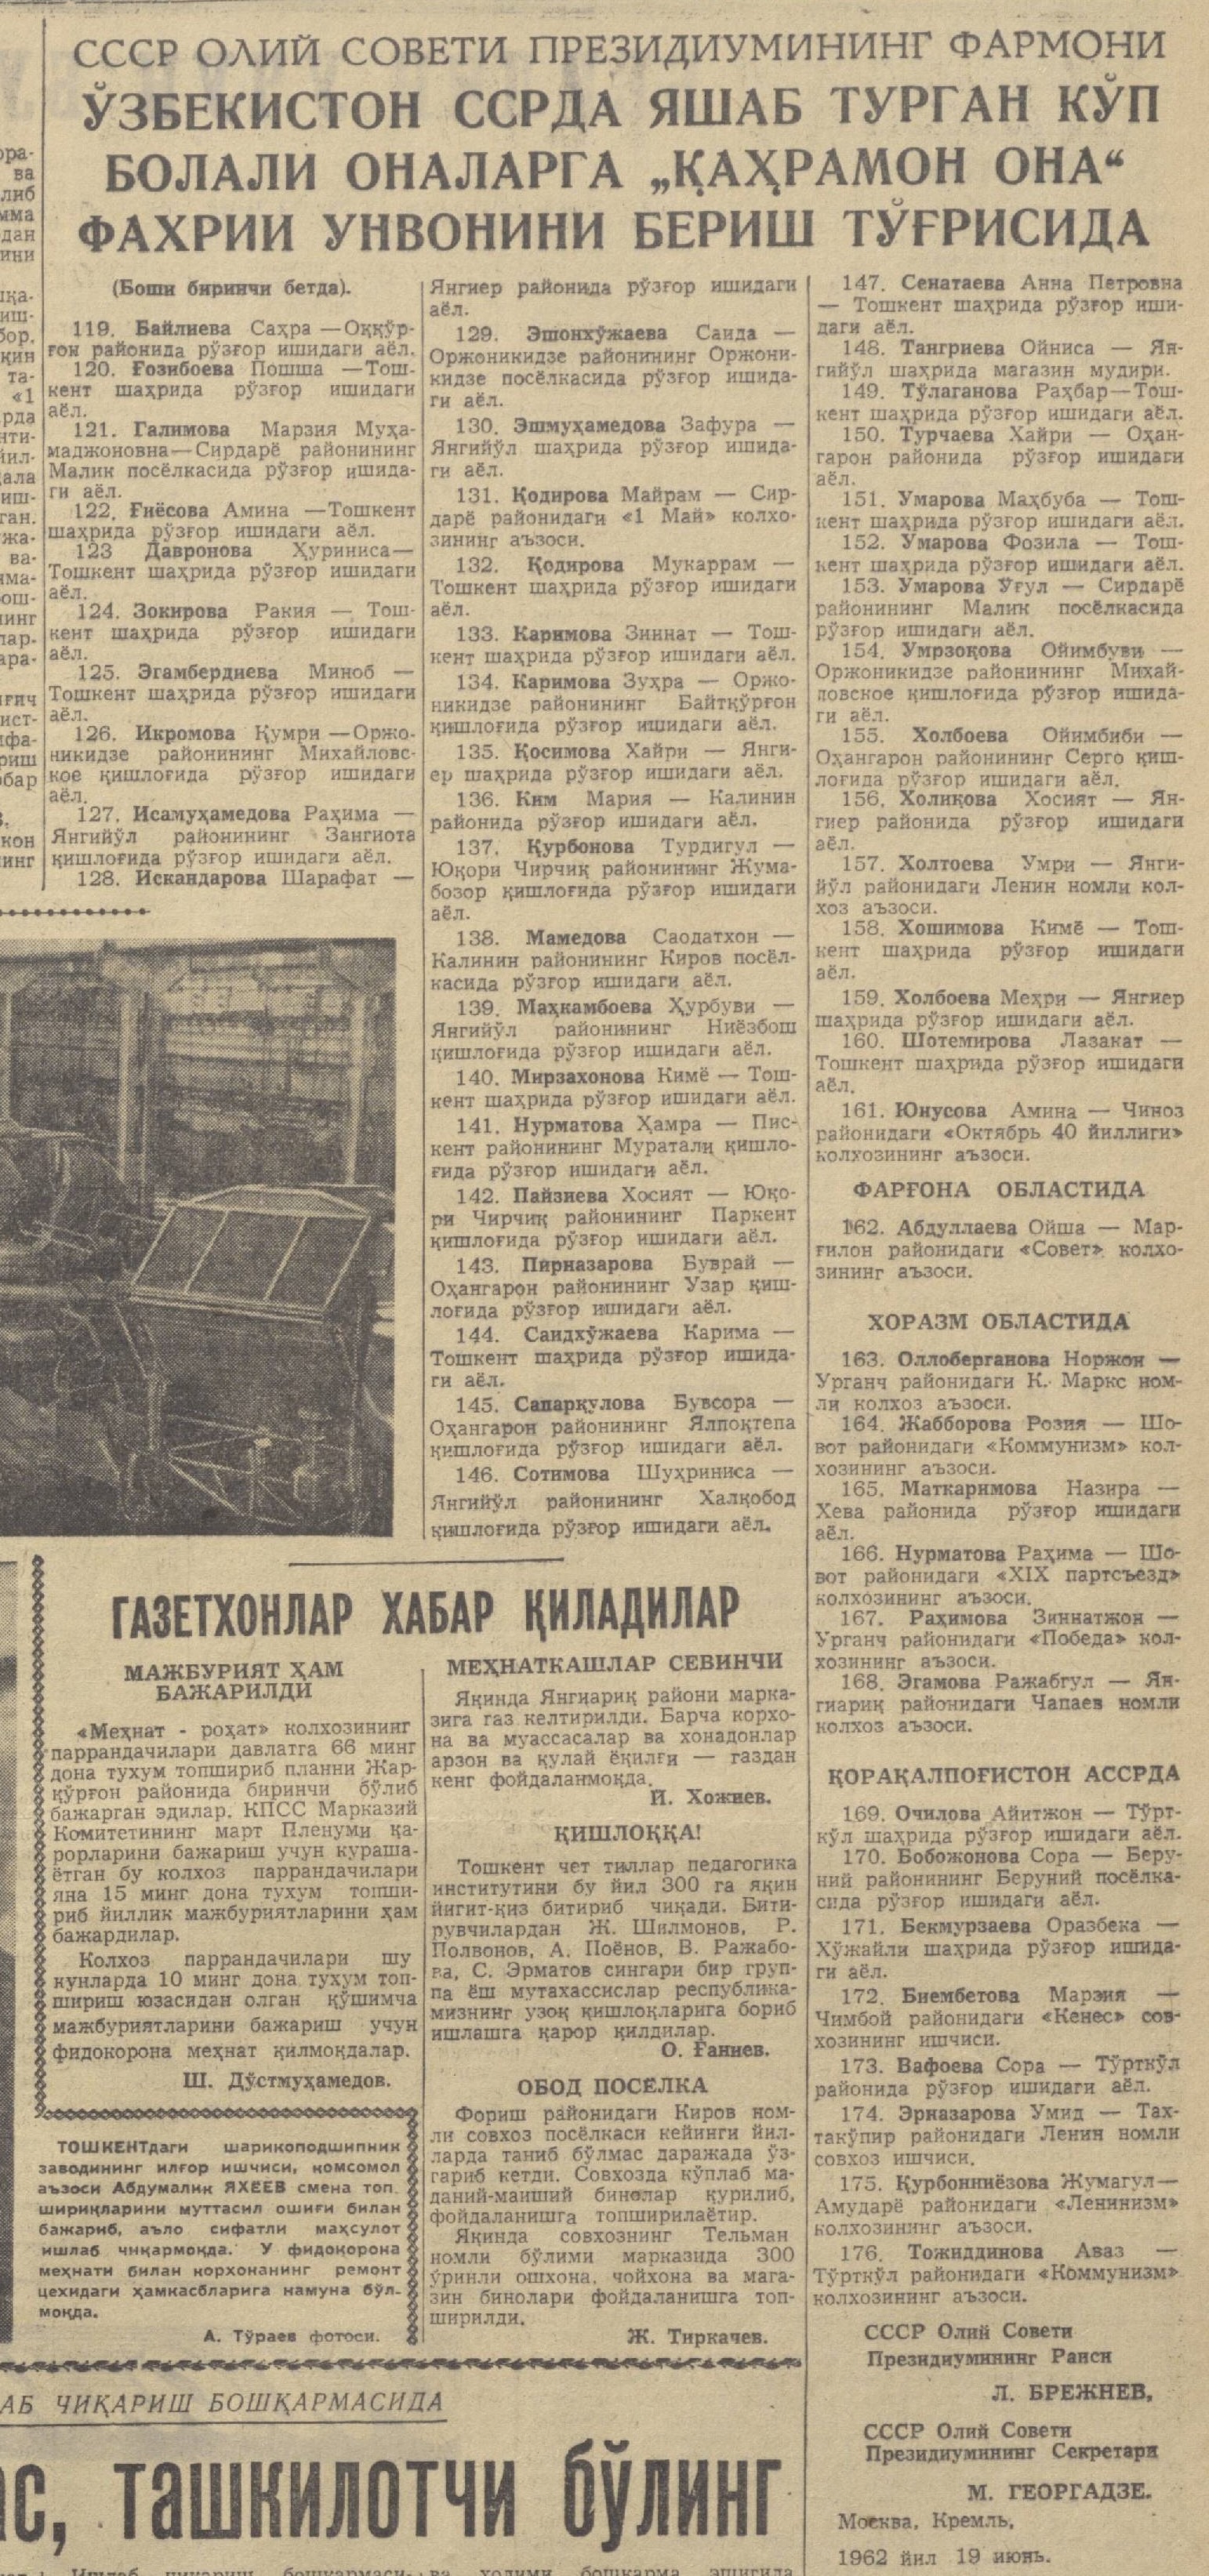 «Қизил Ўзбекистон» газетасининг 1962 йил 22 июнь сонидан лавҳа